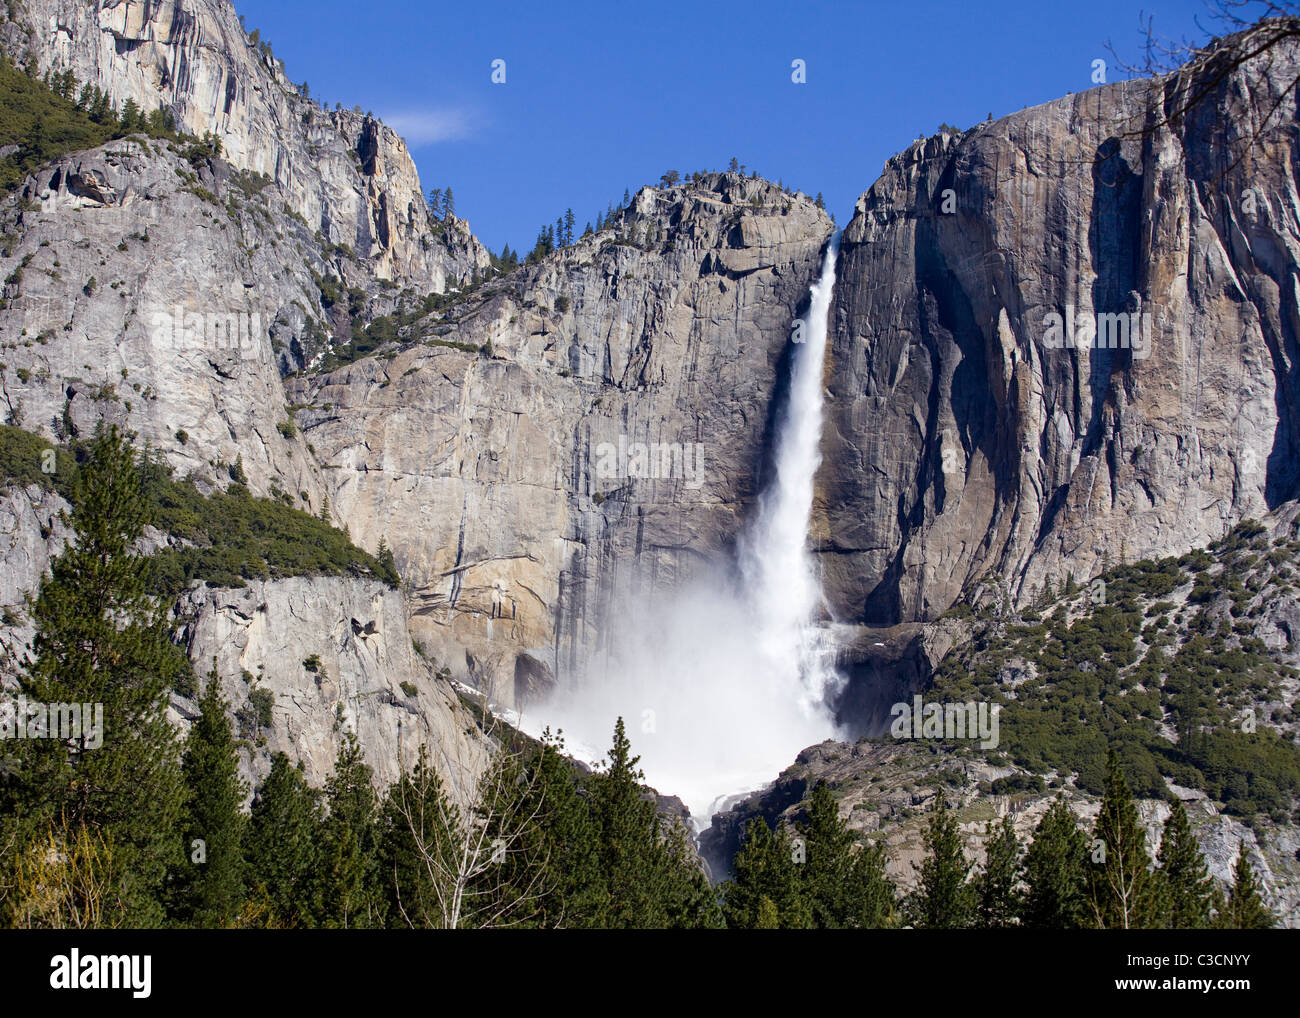 Yosemite falls under blue sky - vallée de Yosemite, California, USA Banque D'Images